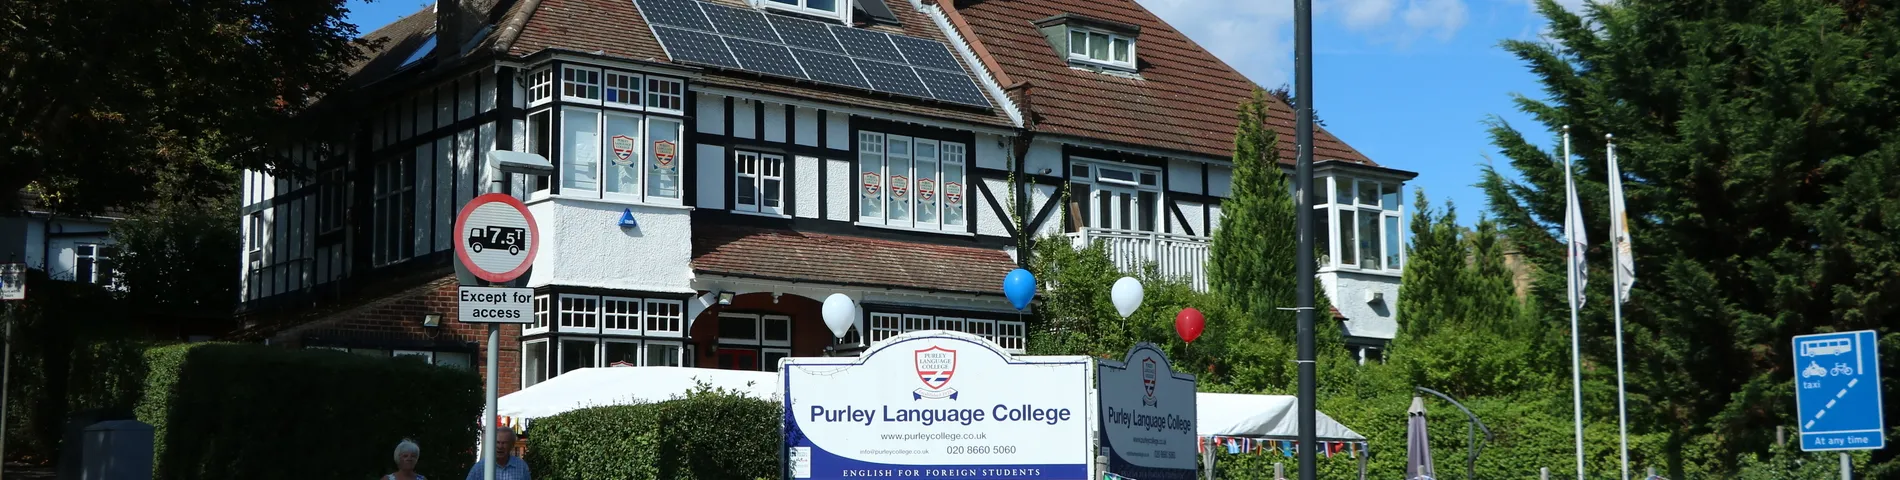 Imatge 1 de l'escola Purley Language College